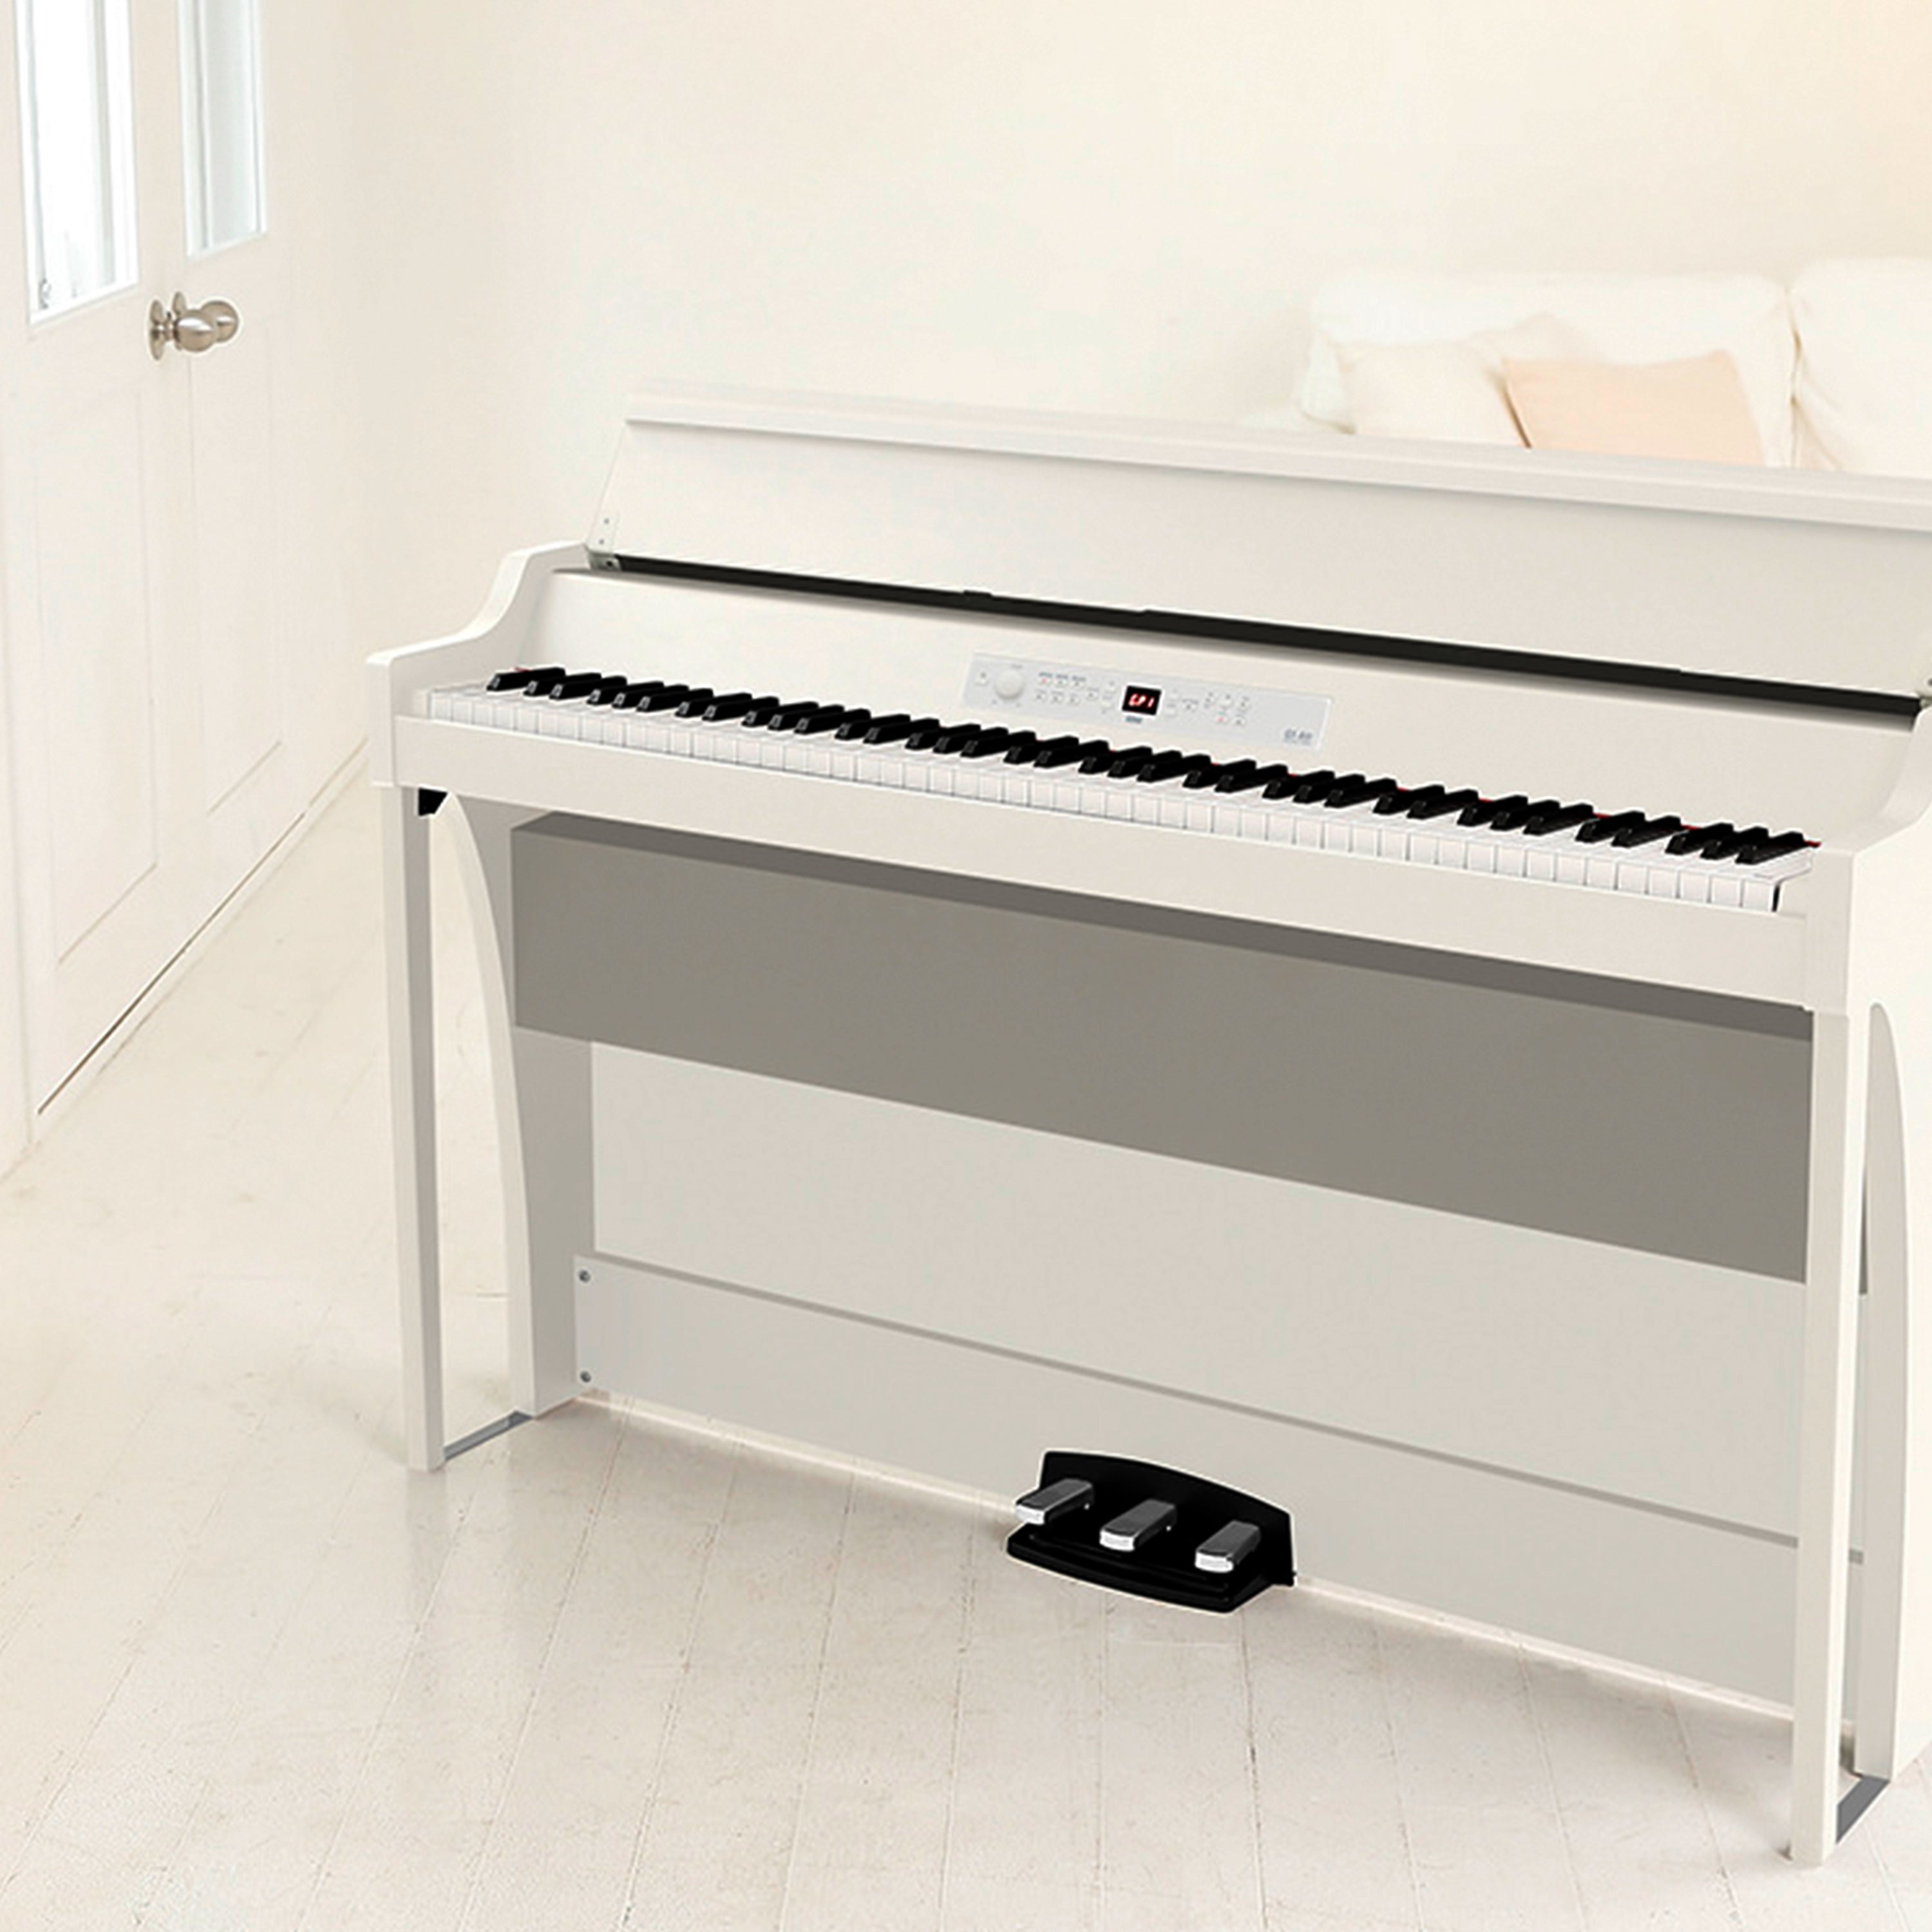 Korg G1B Air Digital Piano - White - in a stylish living room